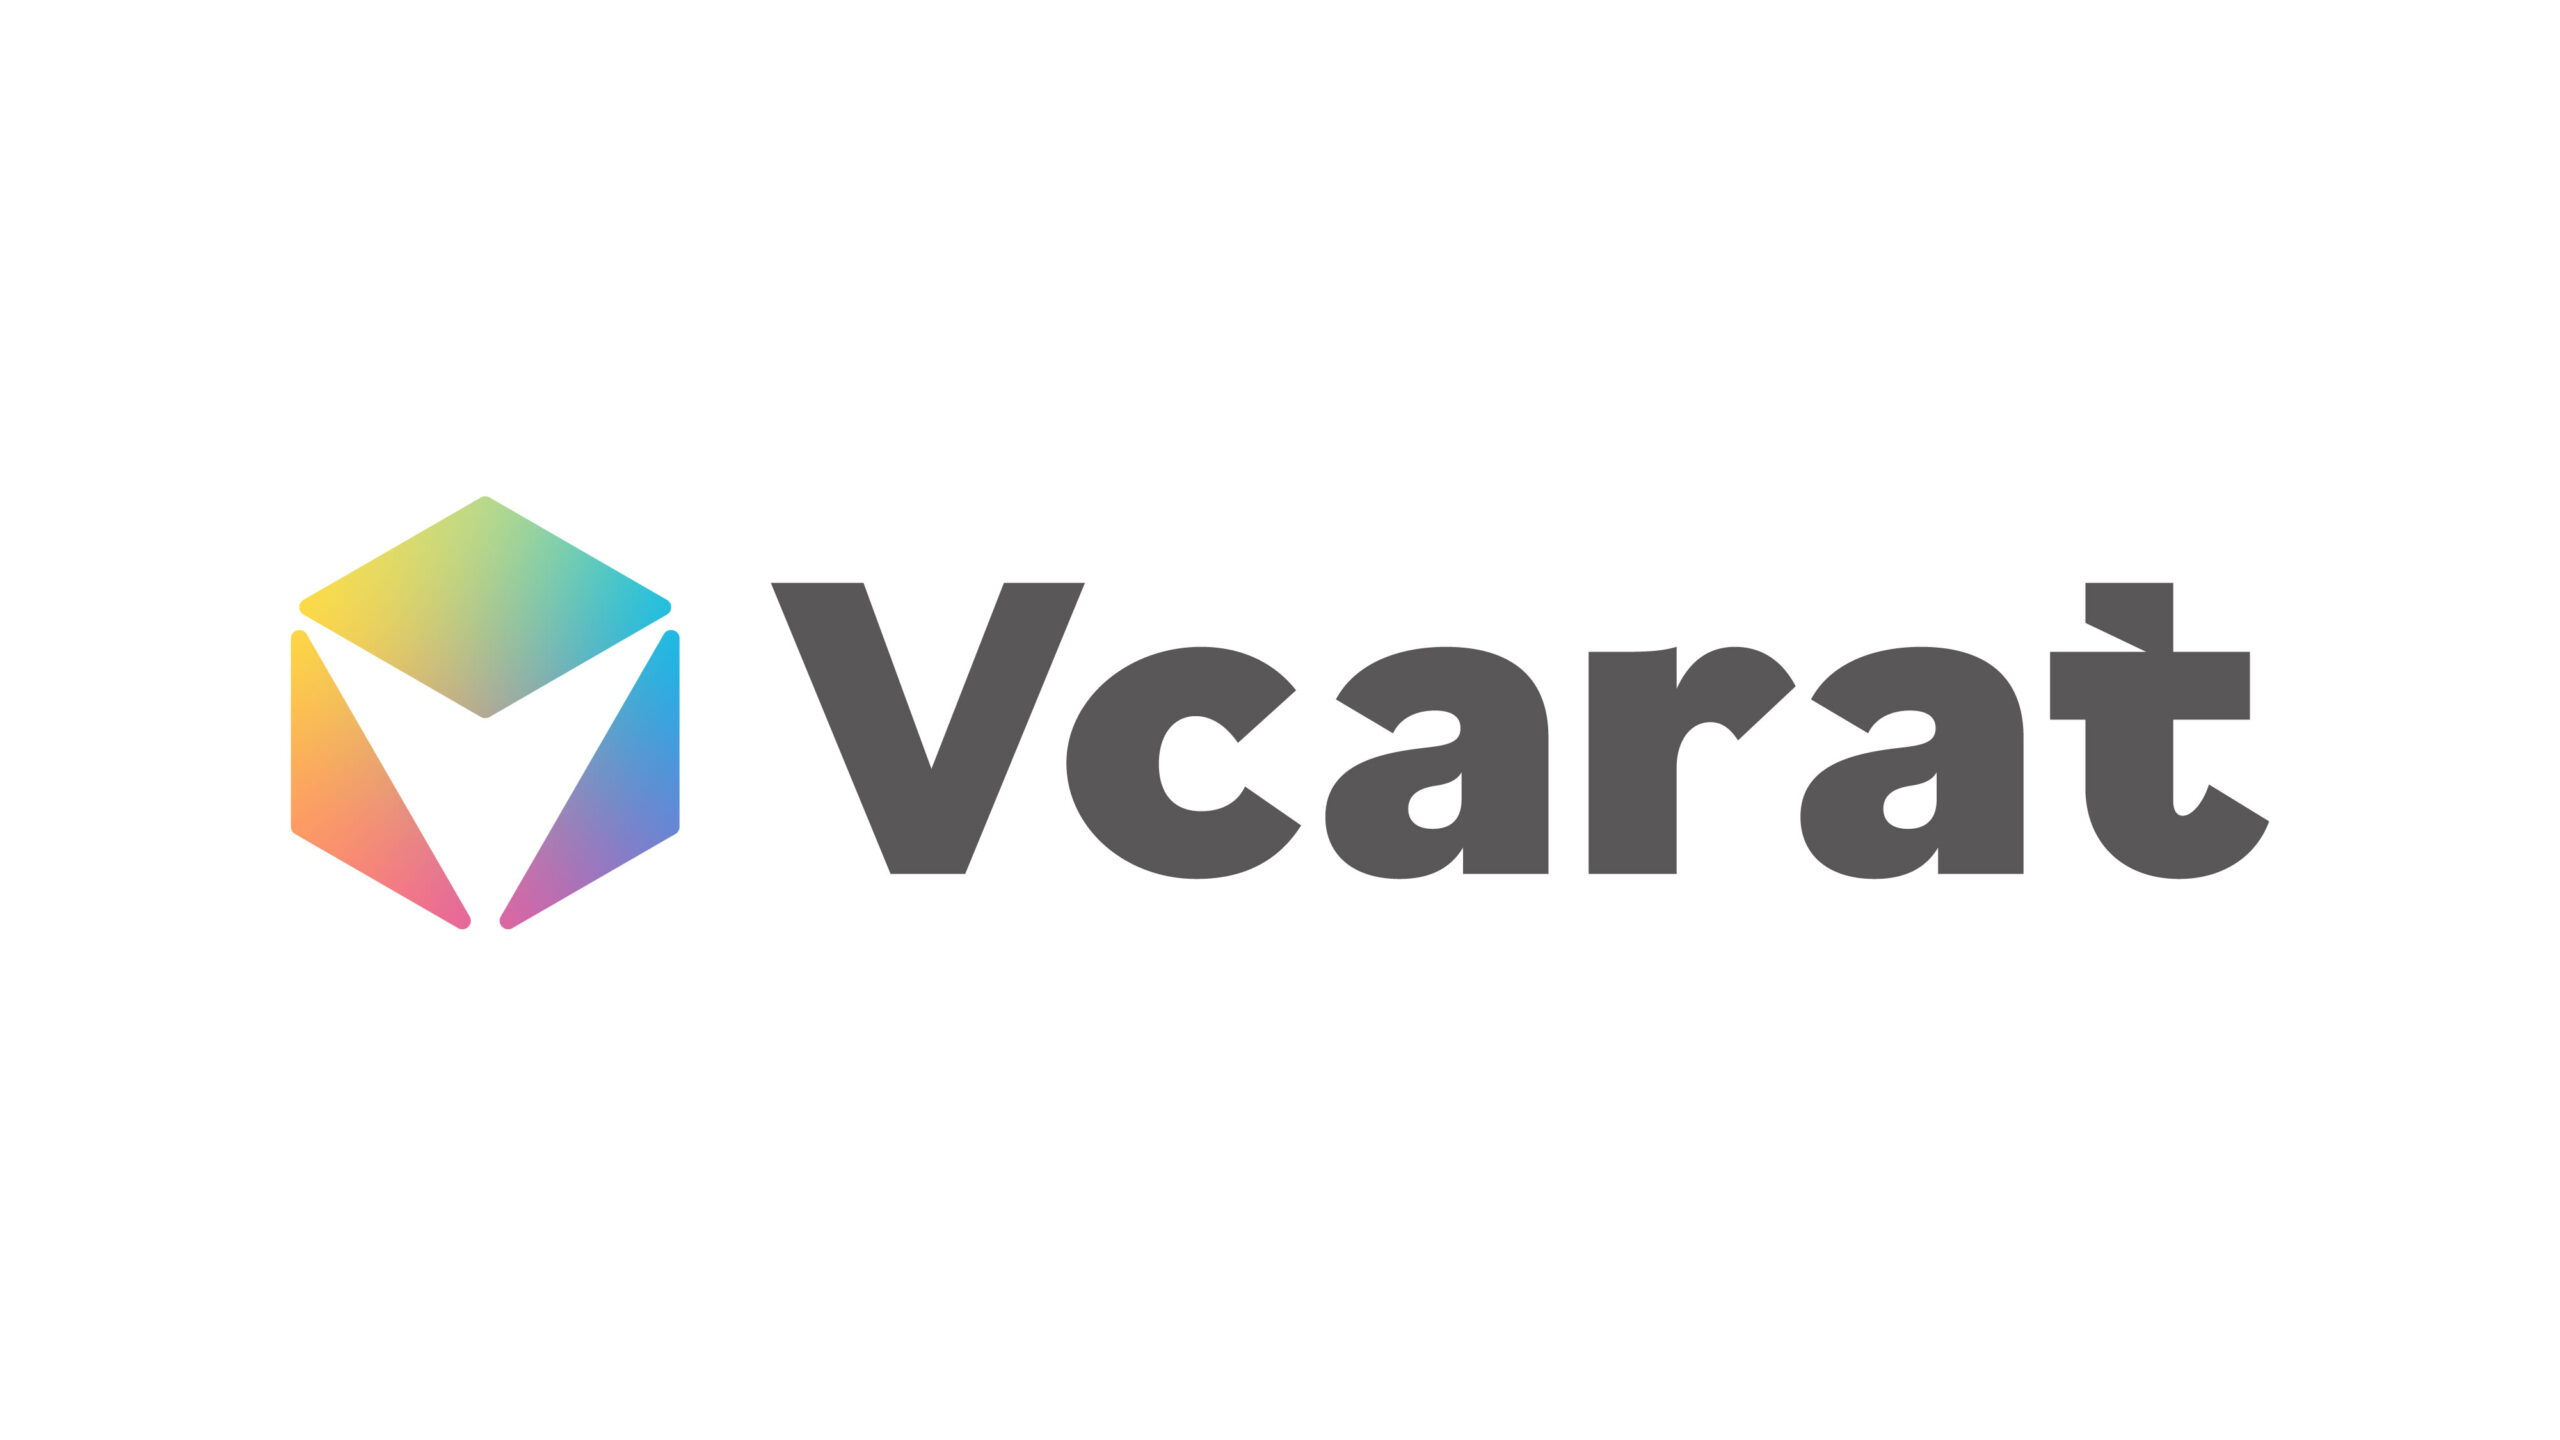 Vcarat公式サイトを公開しました。